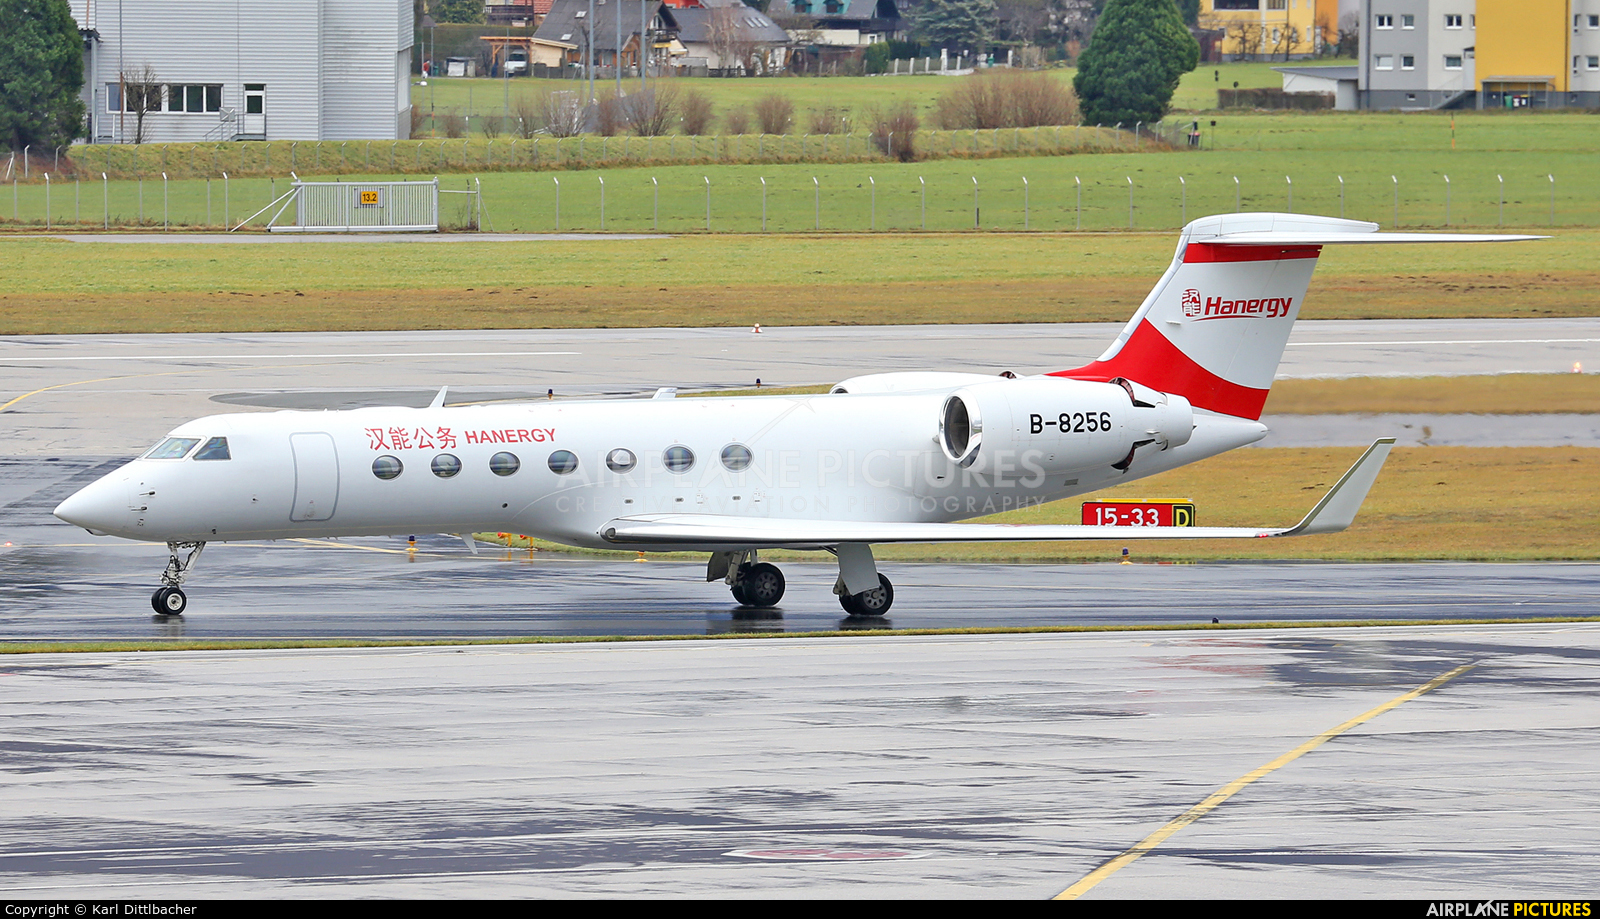 Hanergy Jet B-8256 aircraft at Salzburg